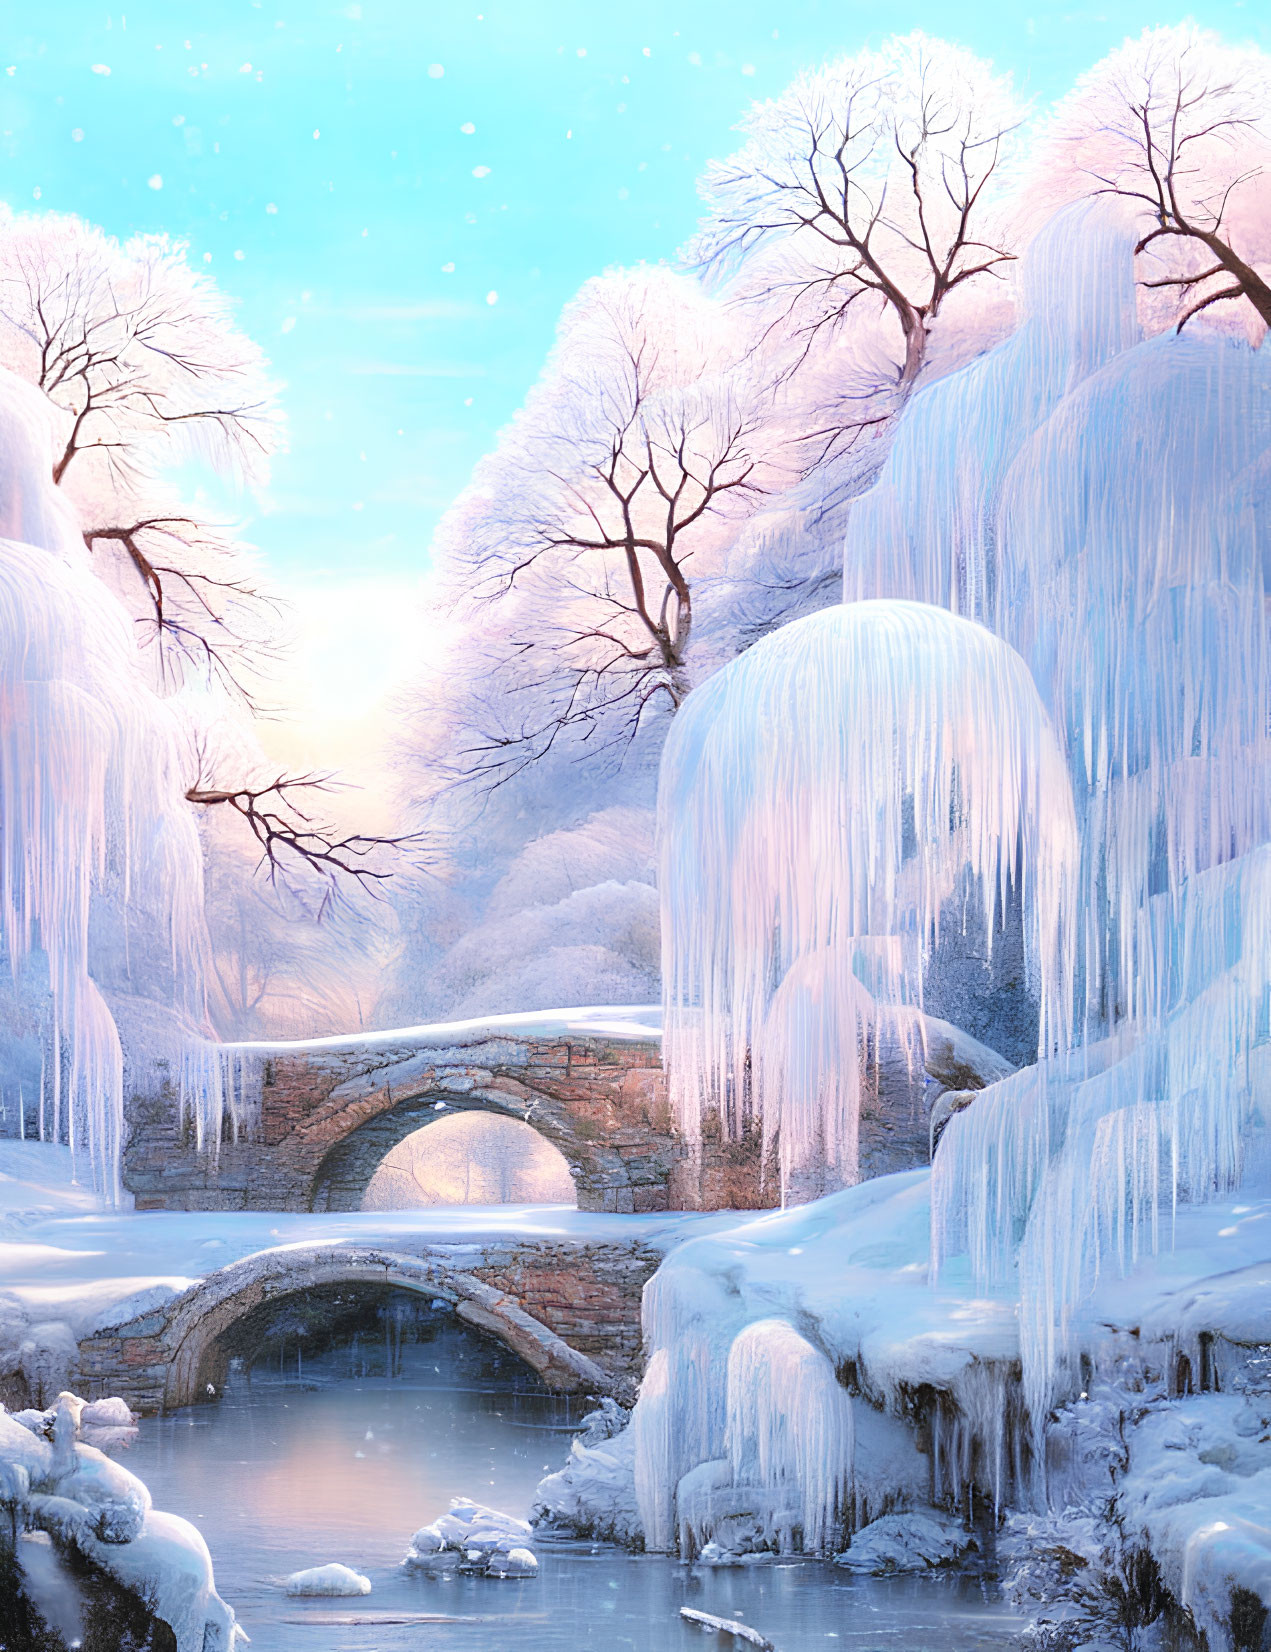 Tranquil Winter Scene: Stone Bridge, Frozen River, Snowy Trees